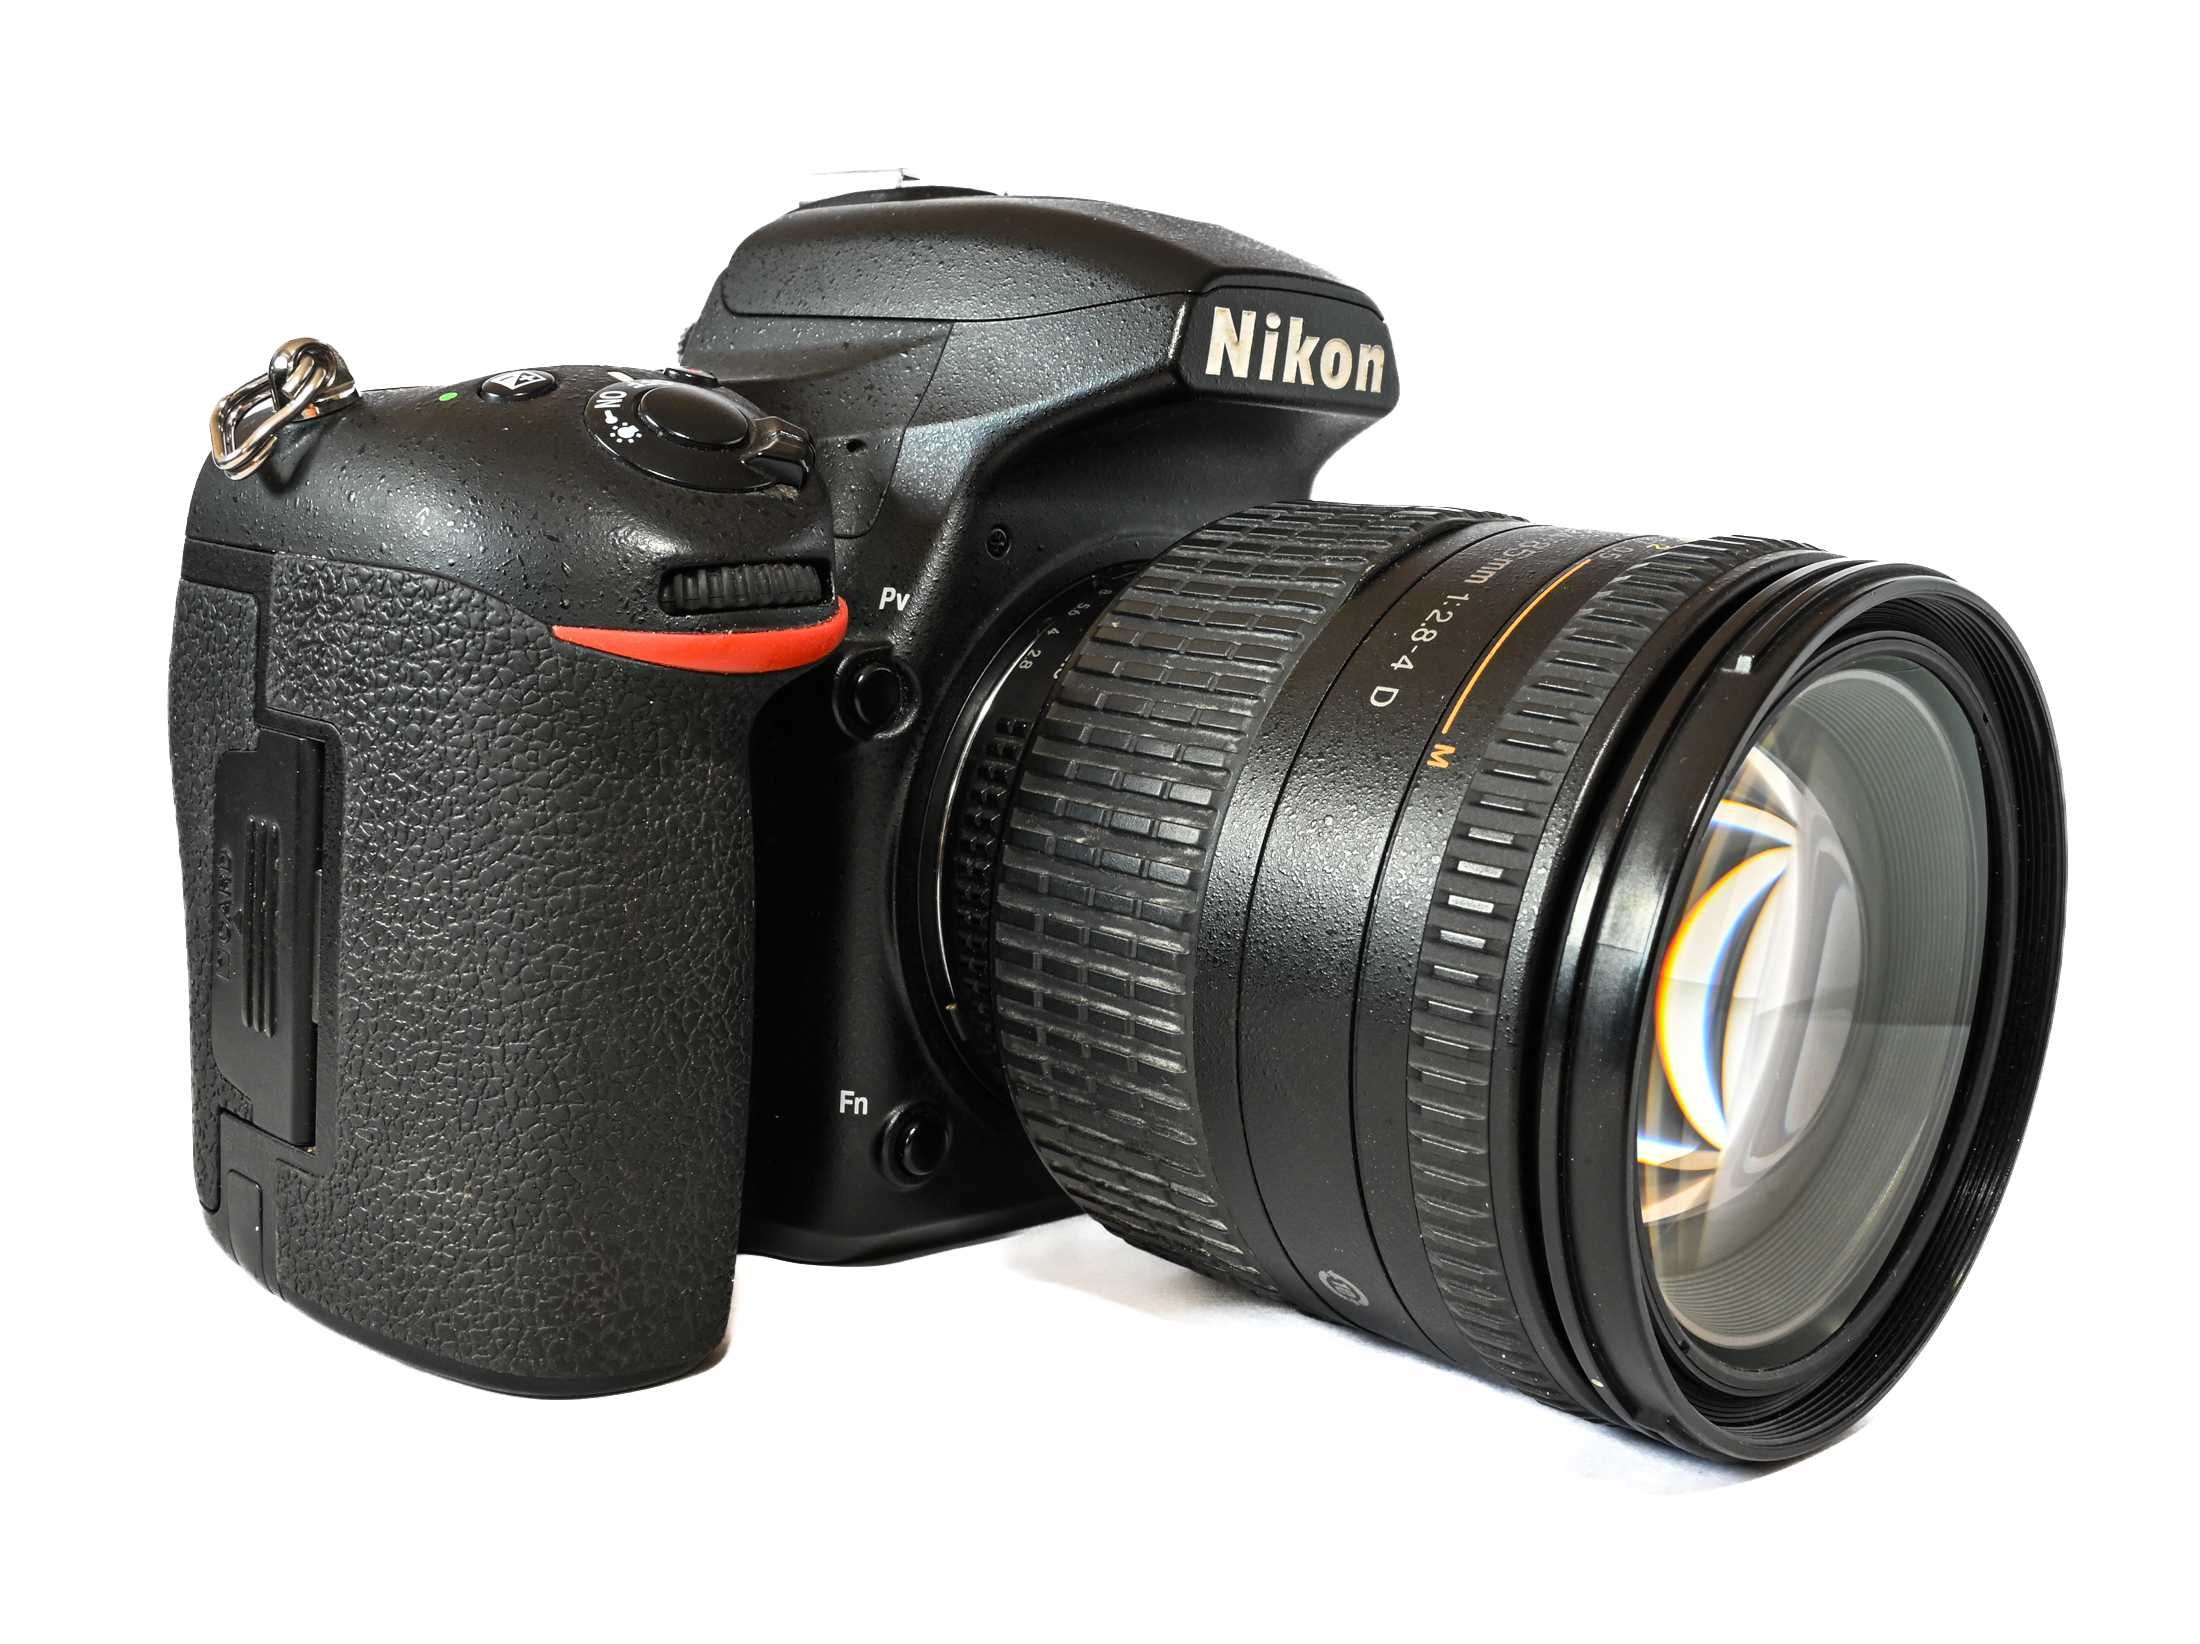 Vand DSLR full frame Nikon D750 cu obiectiv Nikon 24-85mm, f2.8-4